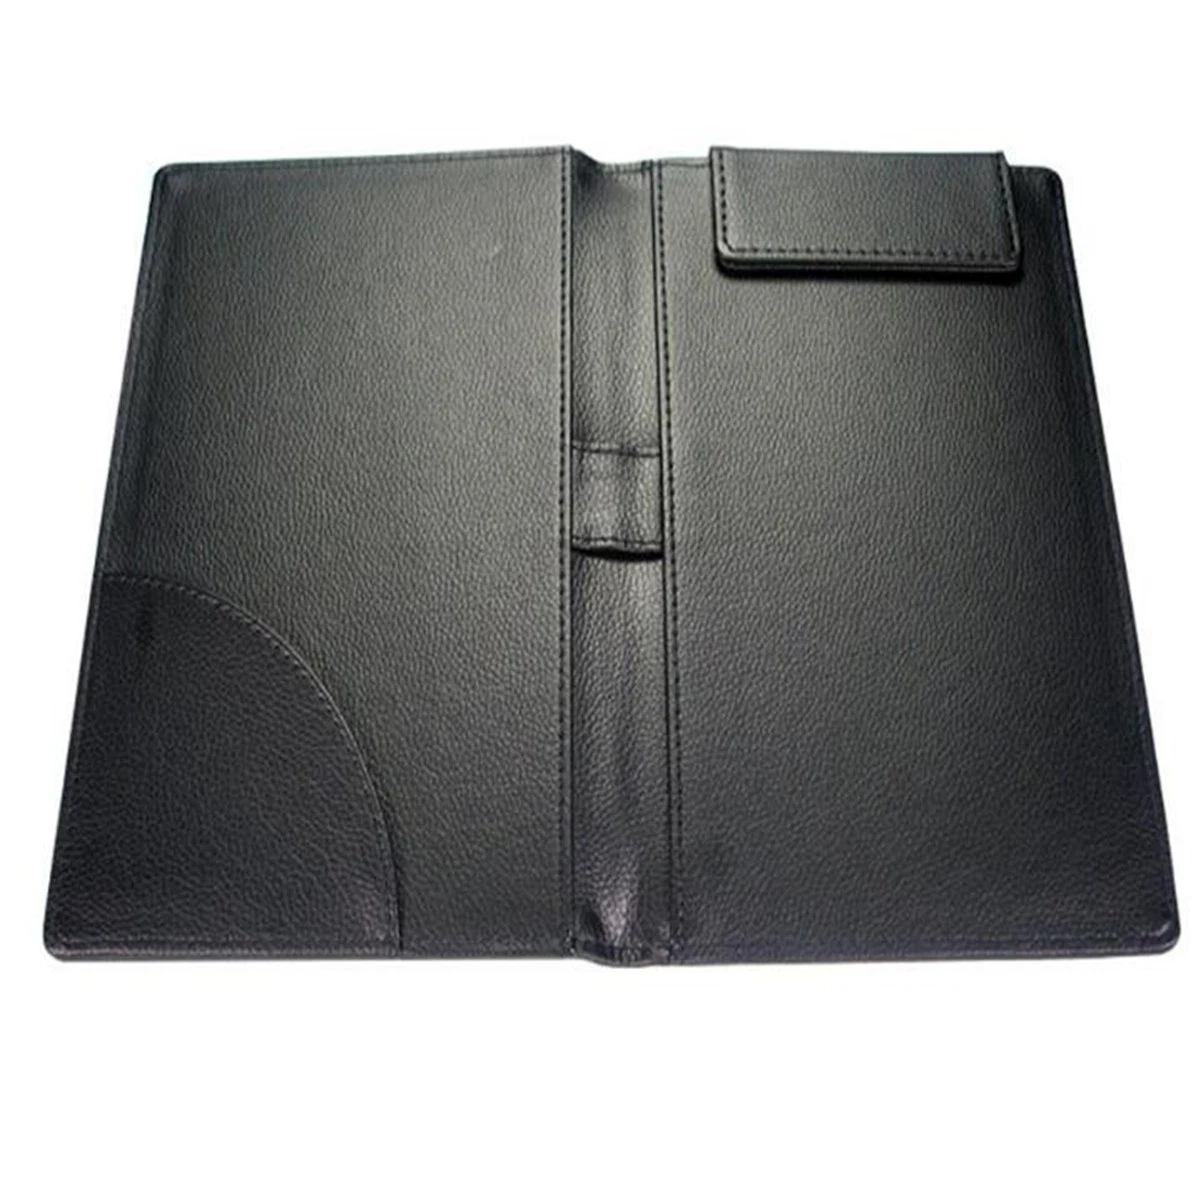 PU Leather Restaurant Magnet Bill Folder with Pen Holder